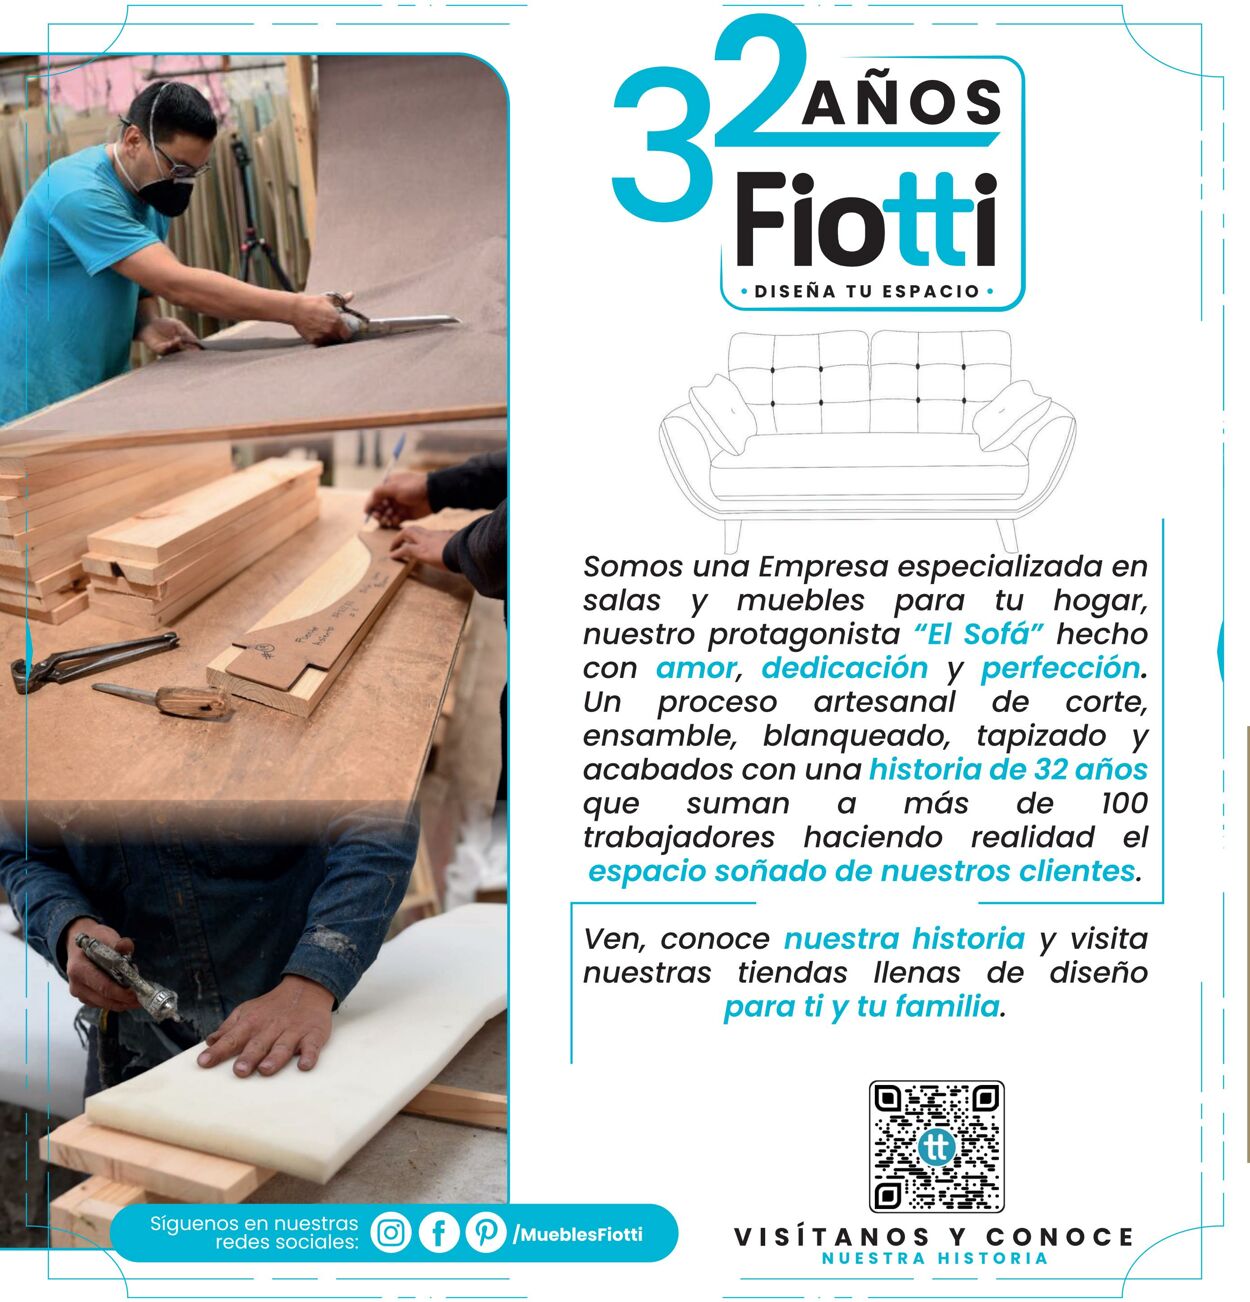 Catálogo Fiotti 01.09.2022 - 31.10.2022